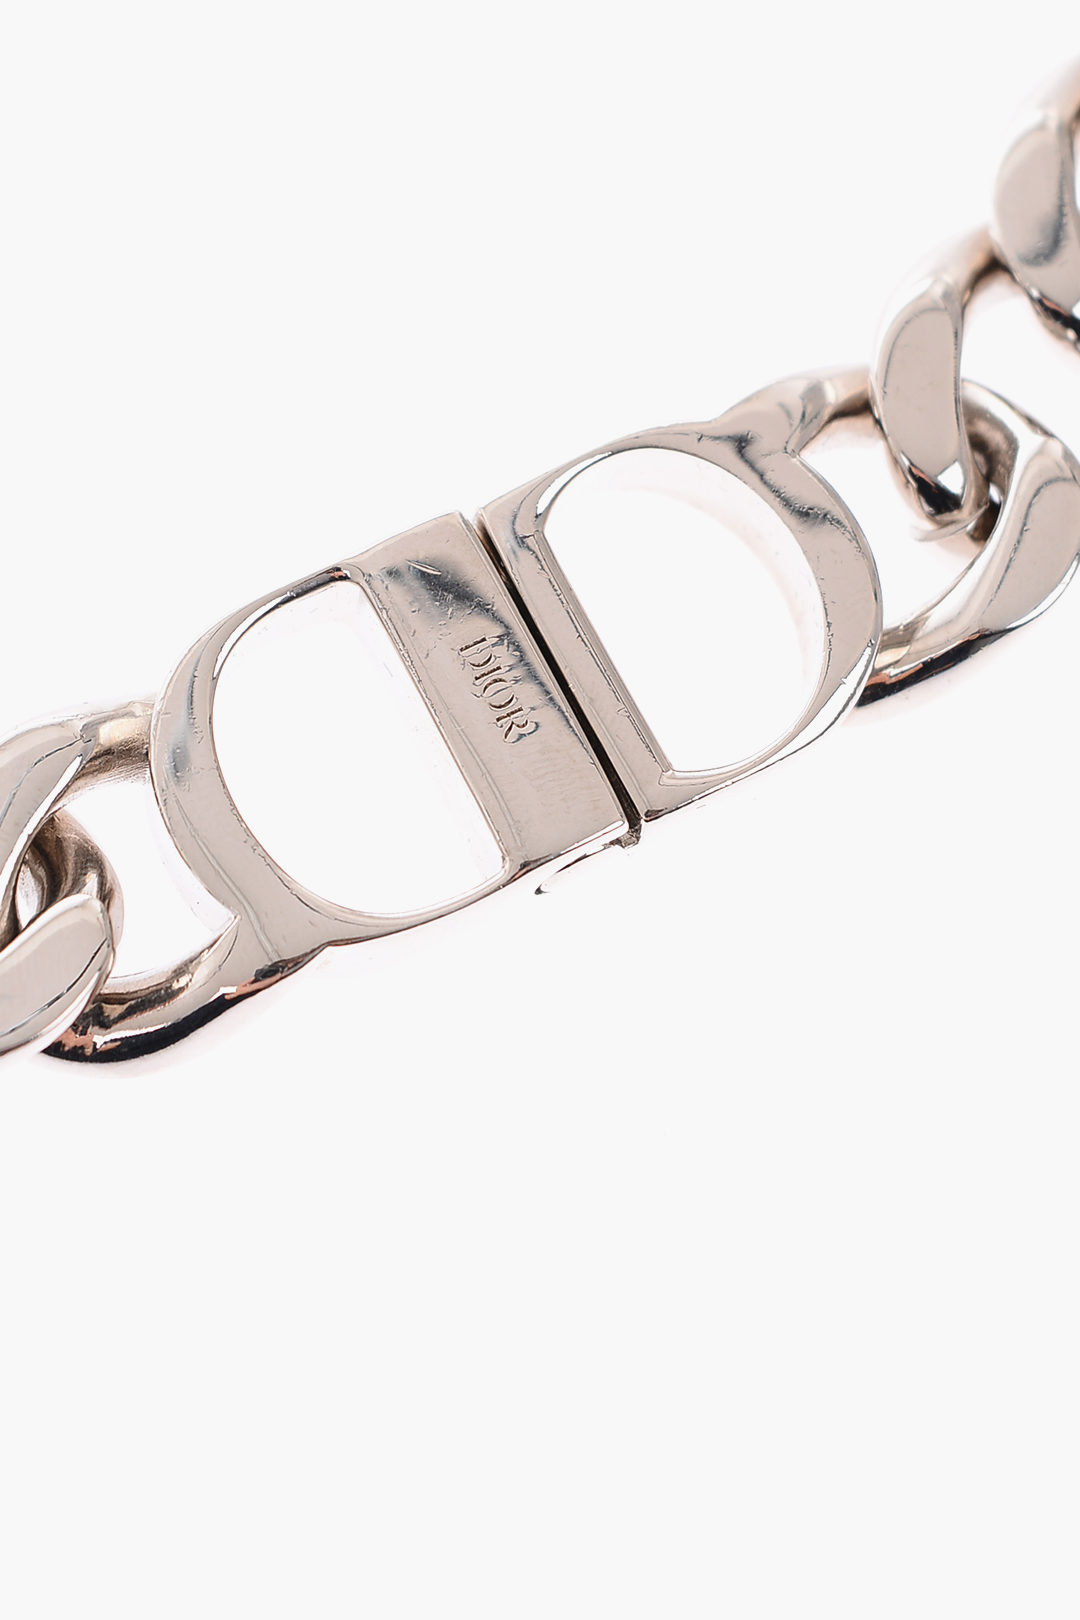 Dior Men's CD Icon Leather Bracelet